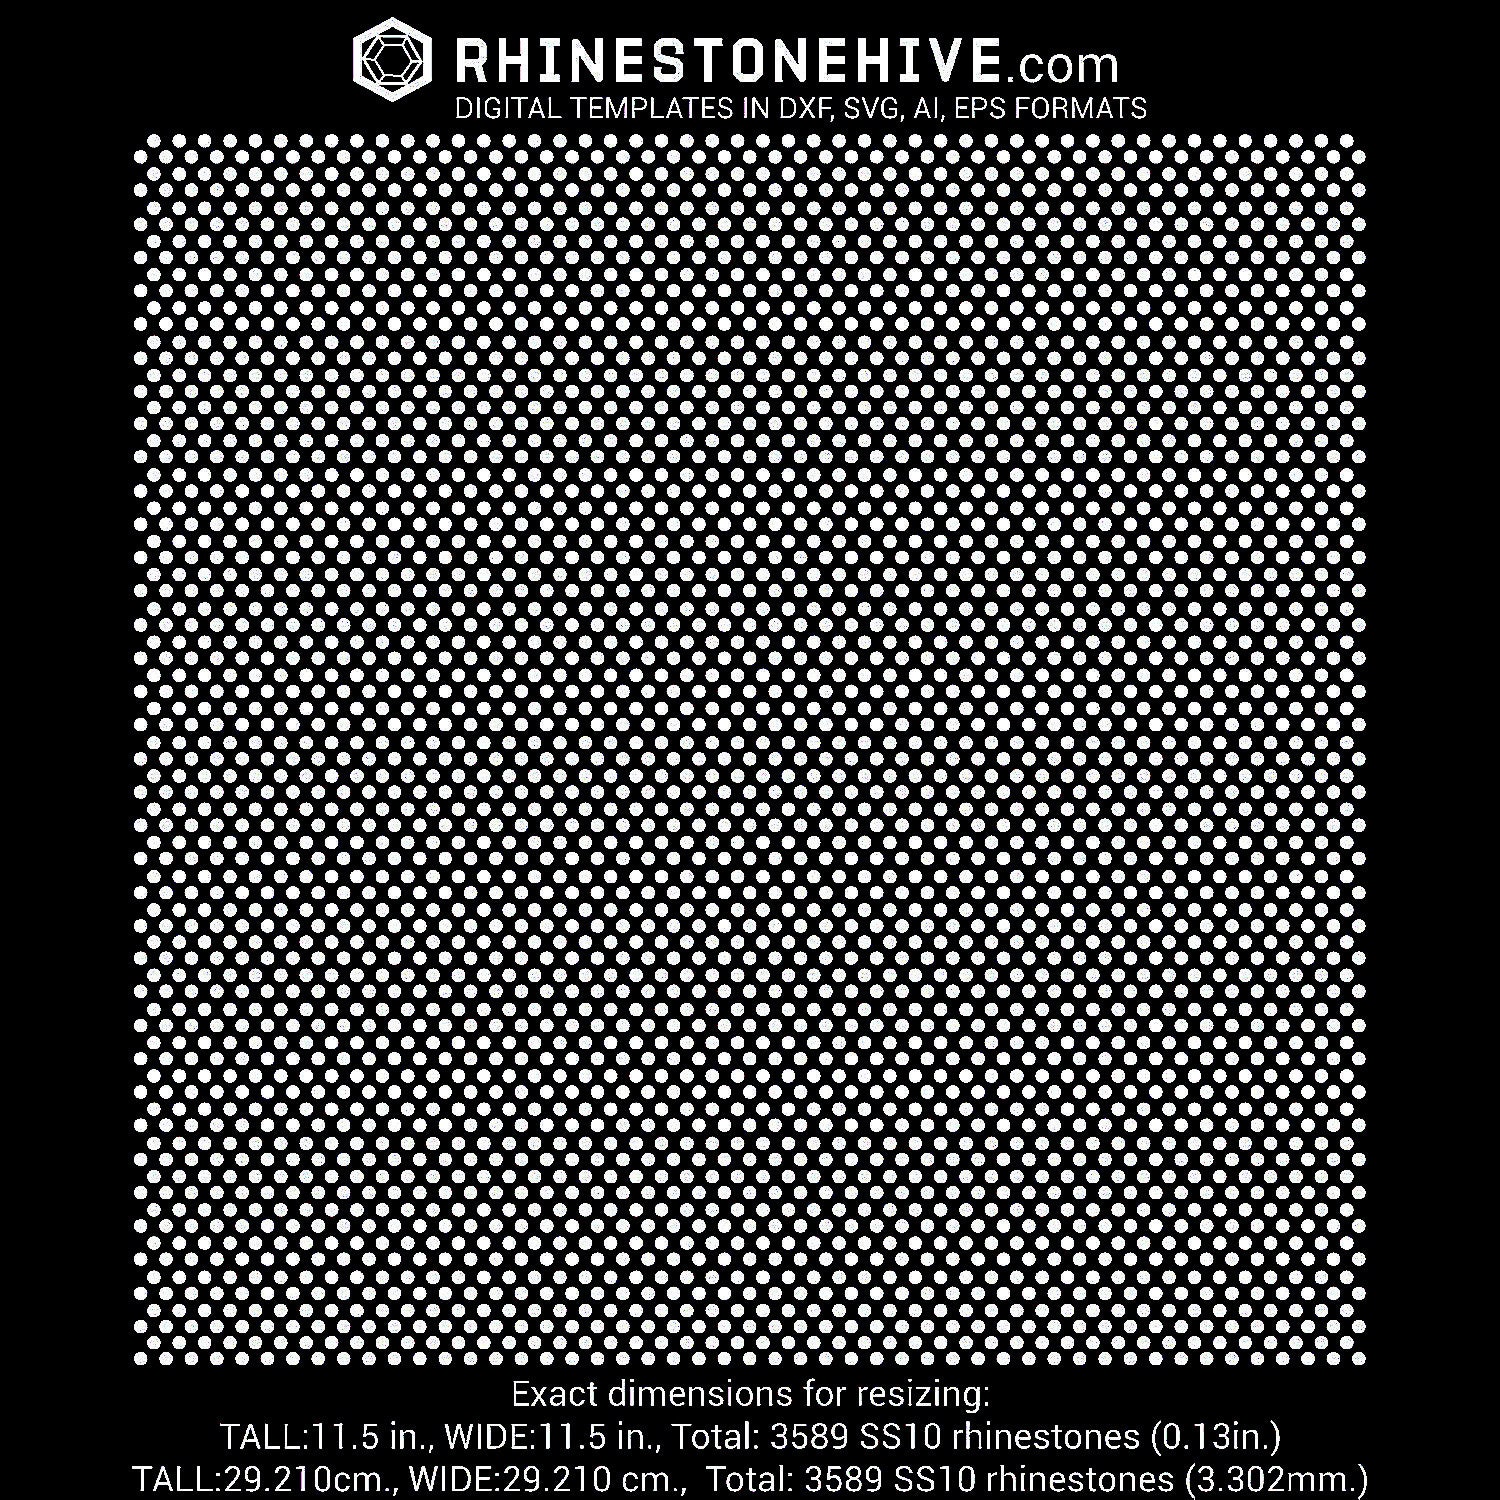 Rhinestone Svg Files Rhinestone Designs - vrogue.co